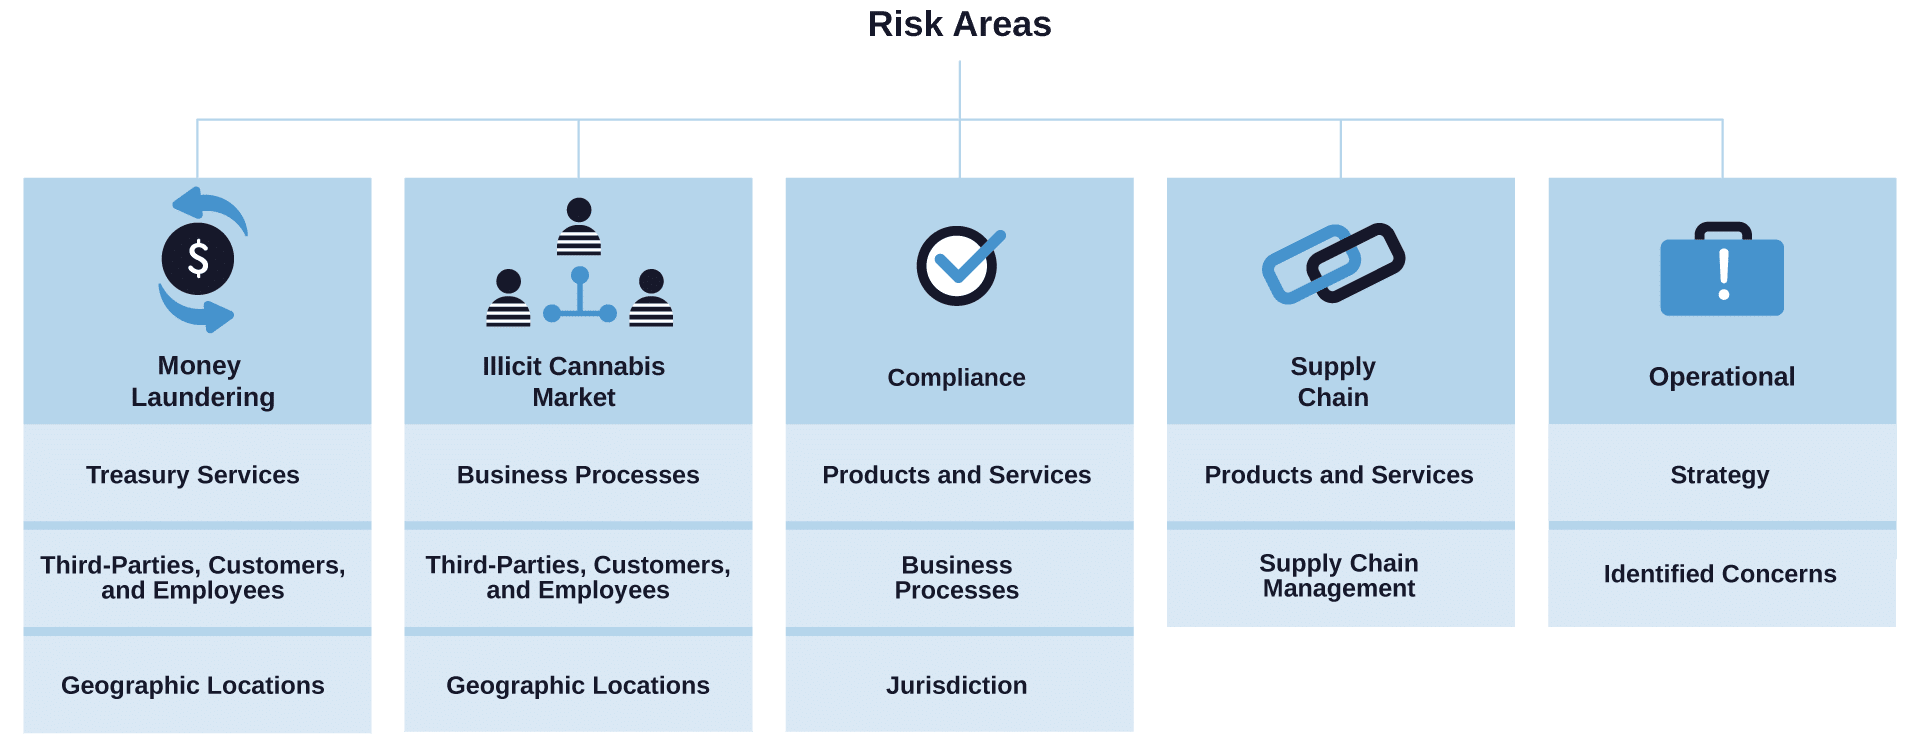 Risk Areas Framework infographic on transparent background